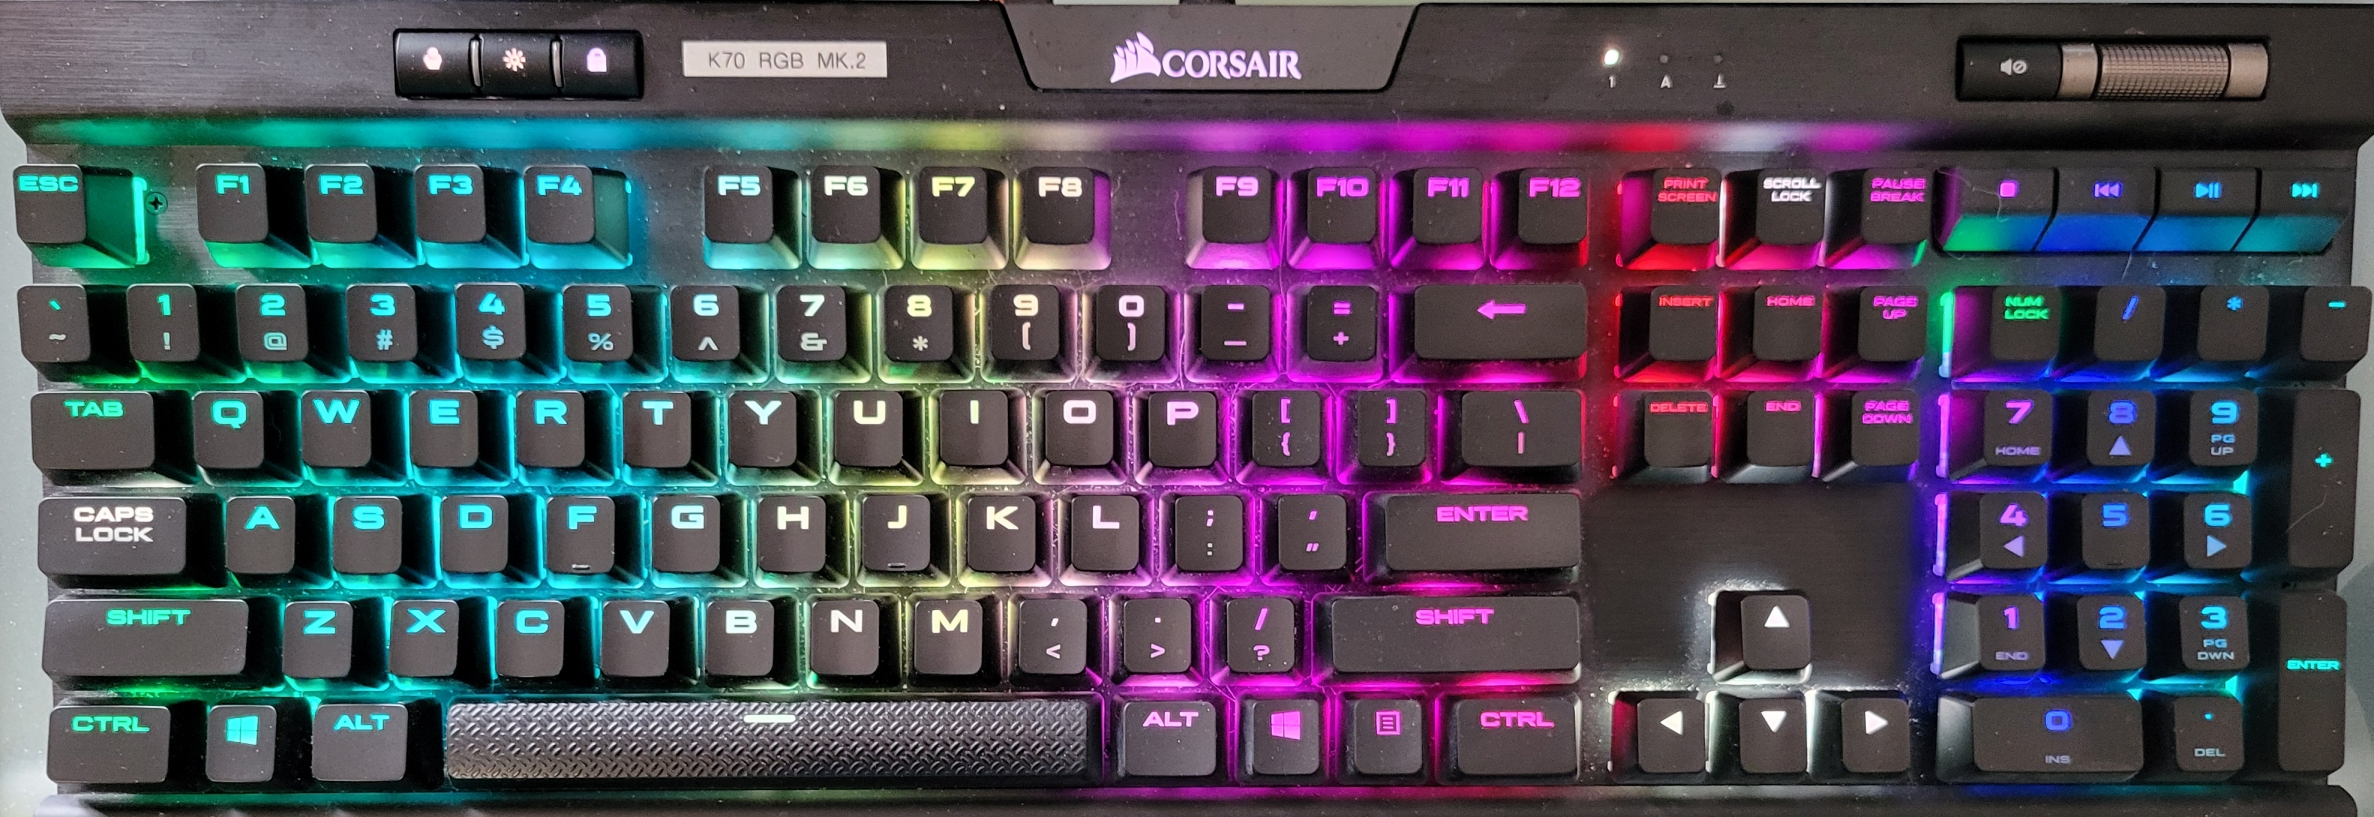 Corsair K70 RGB MK2 keyboard with RGB light patterns.